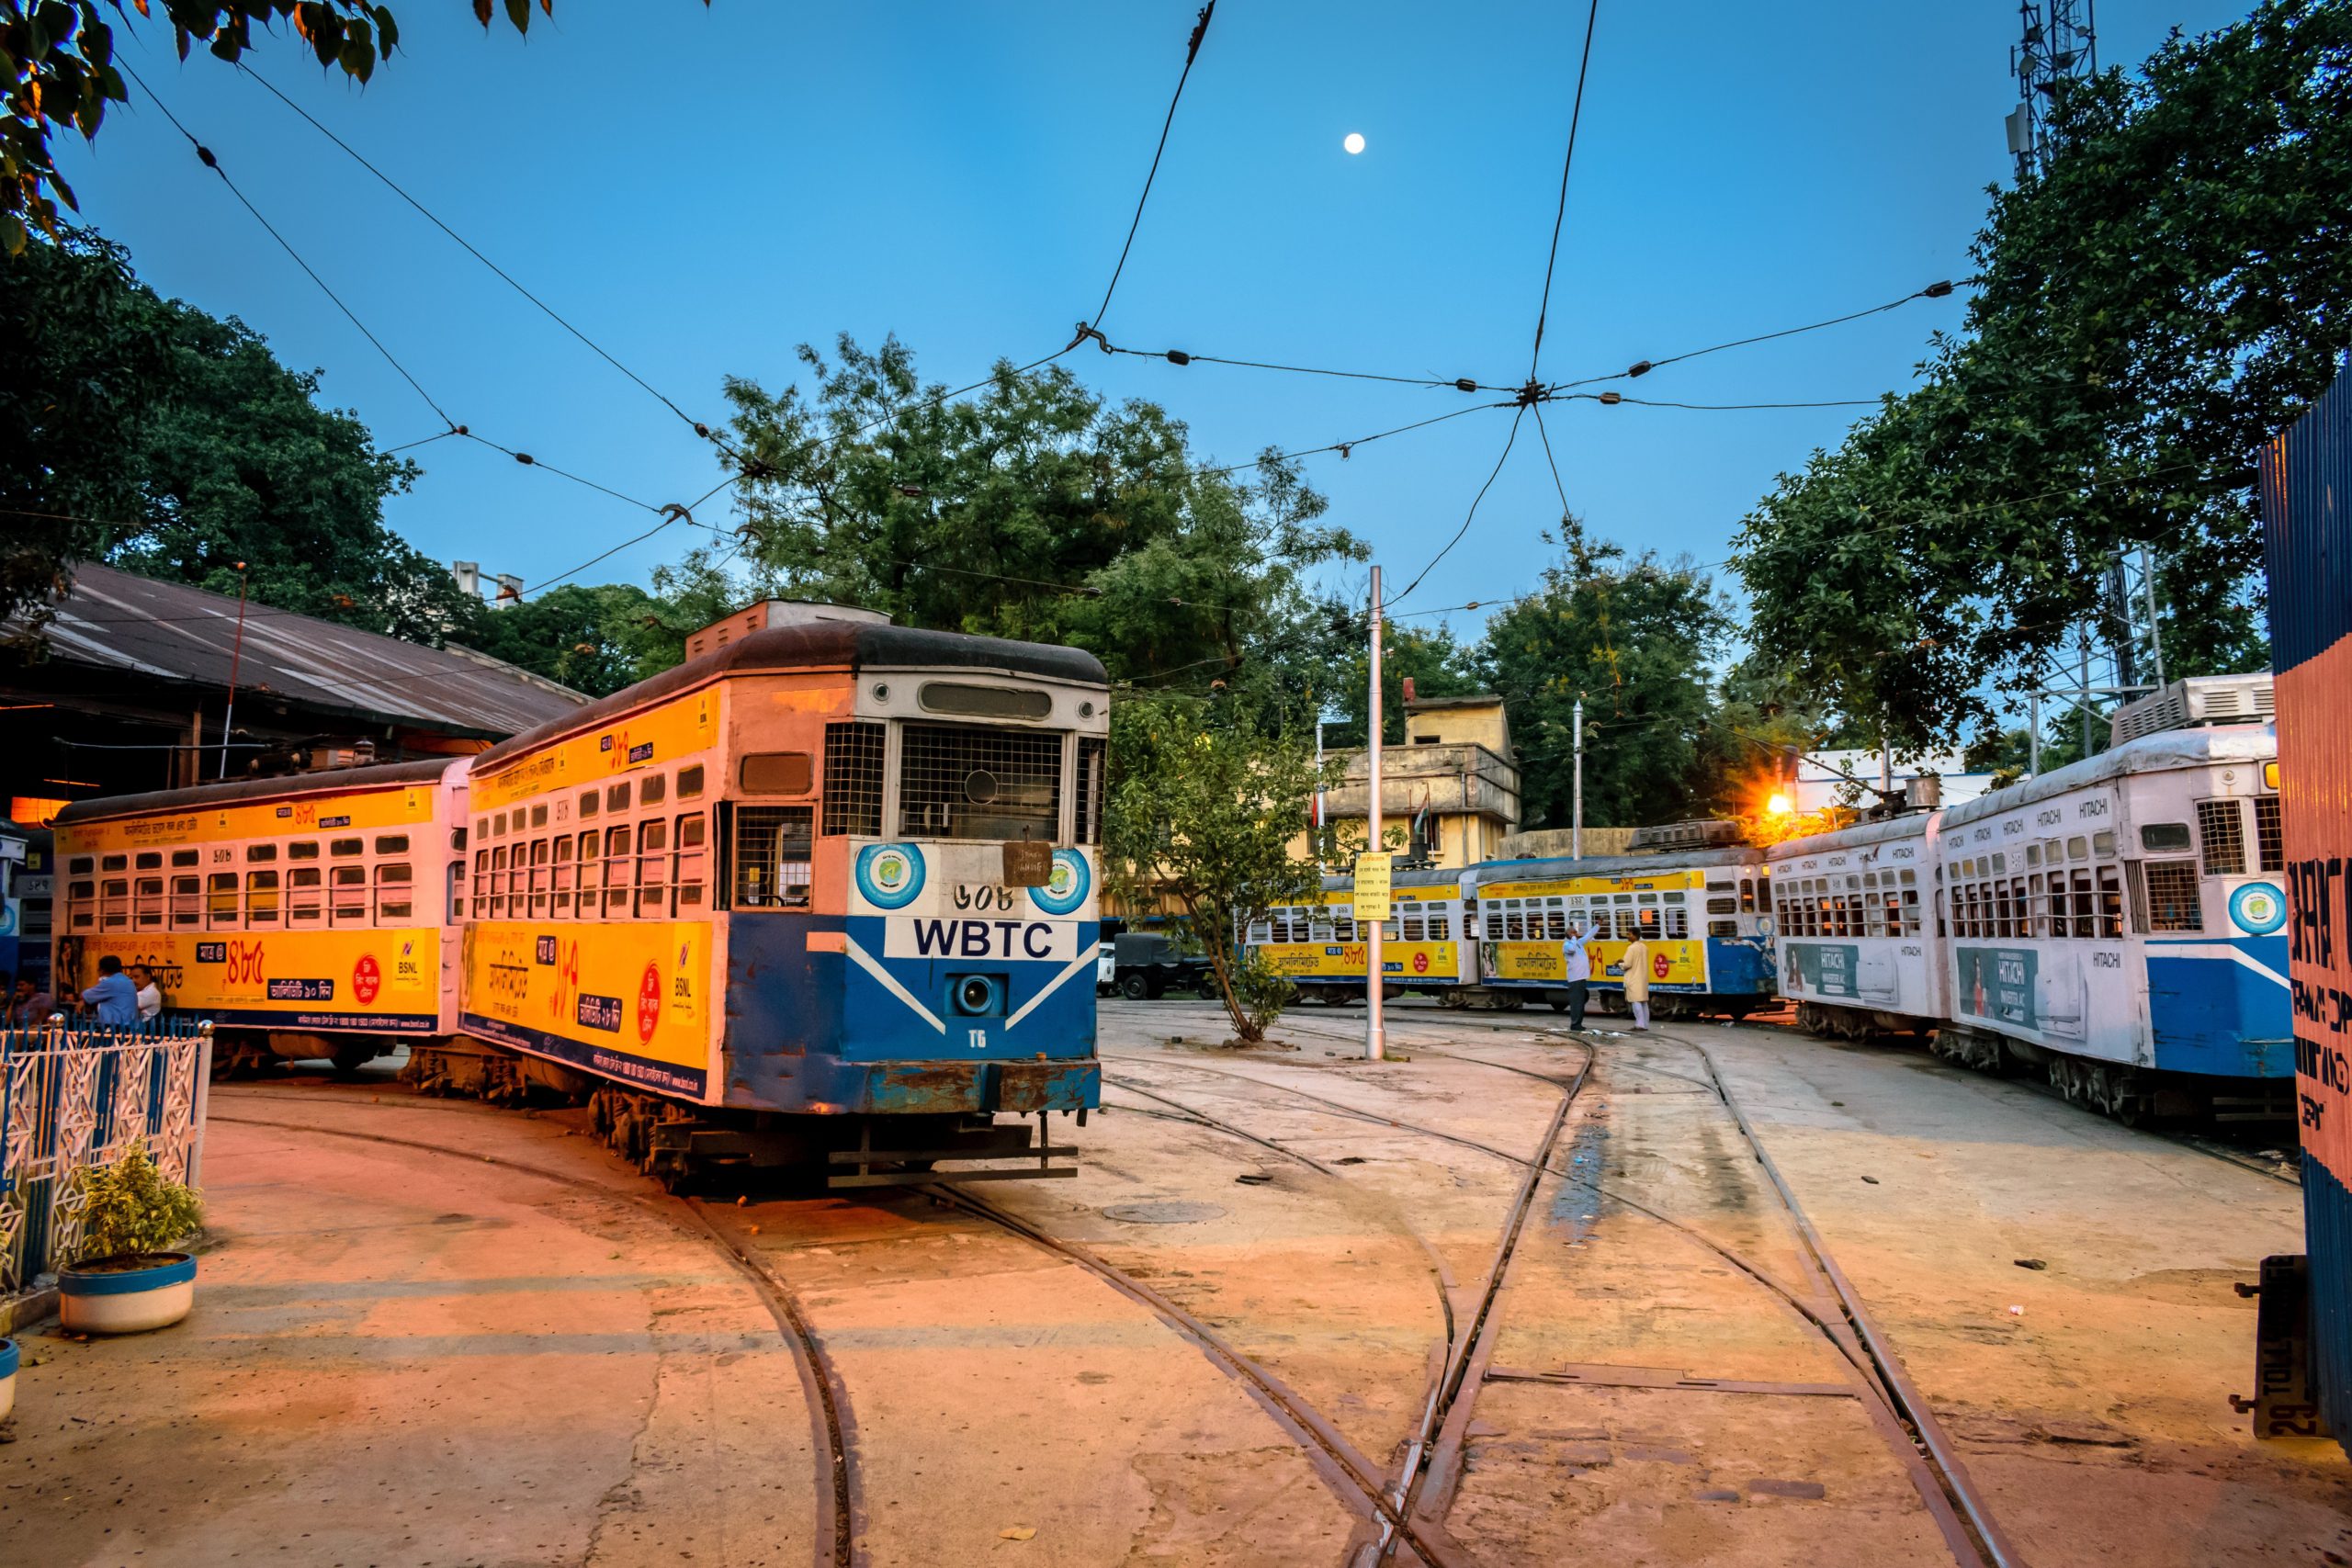 Kolkata historic Trams